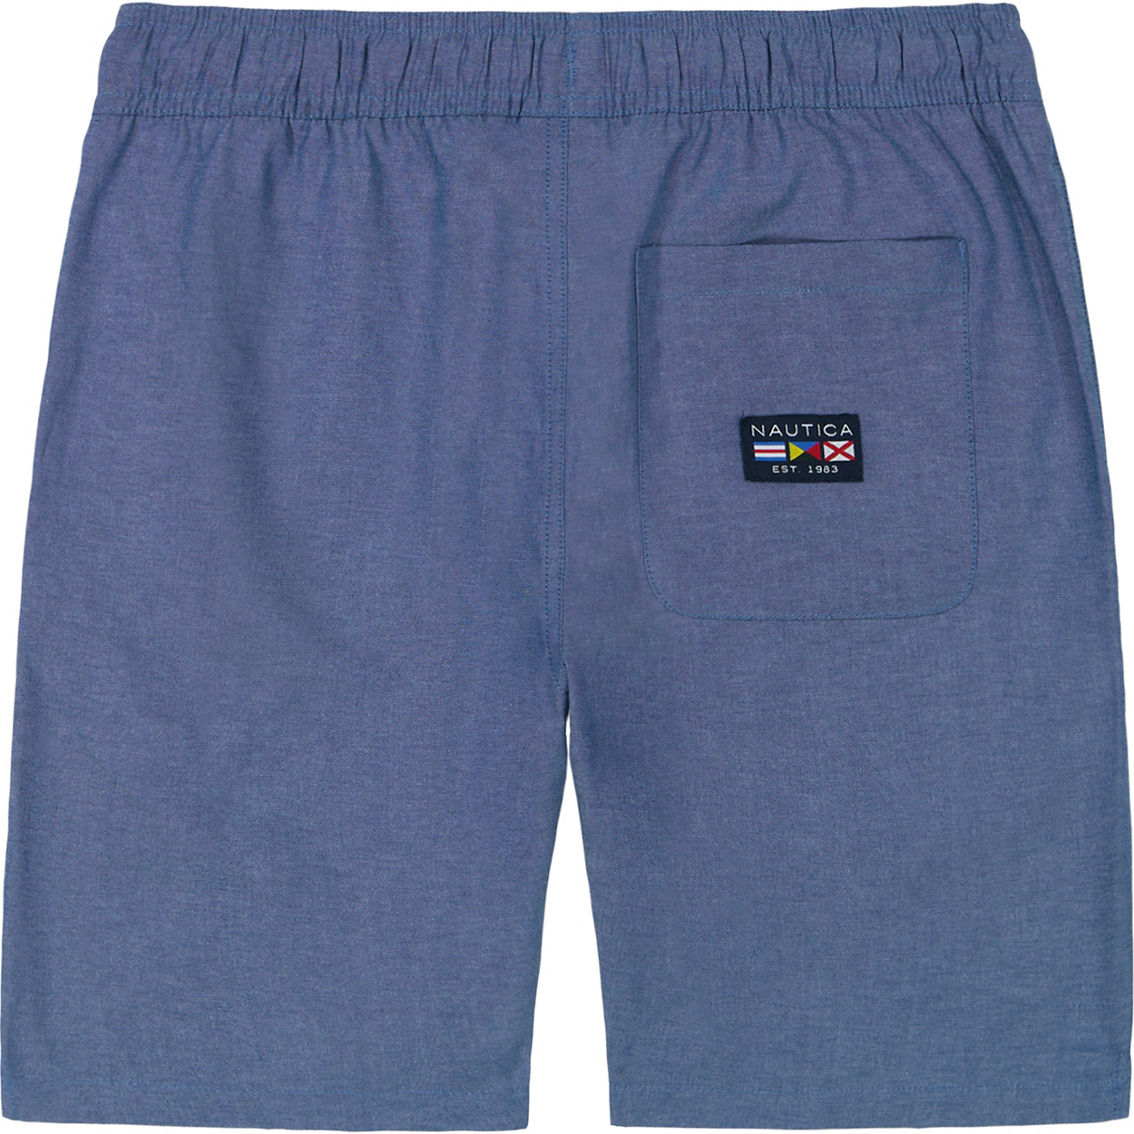 Nautica Boys Pull On Shorts - Image 2 of 2